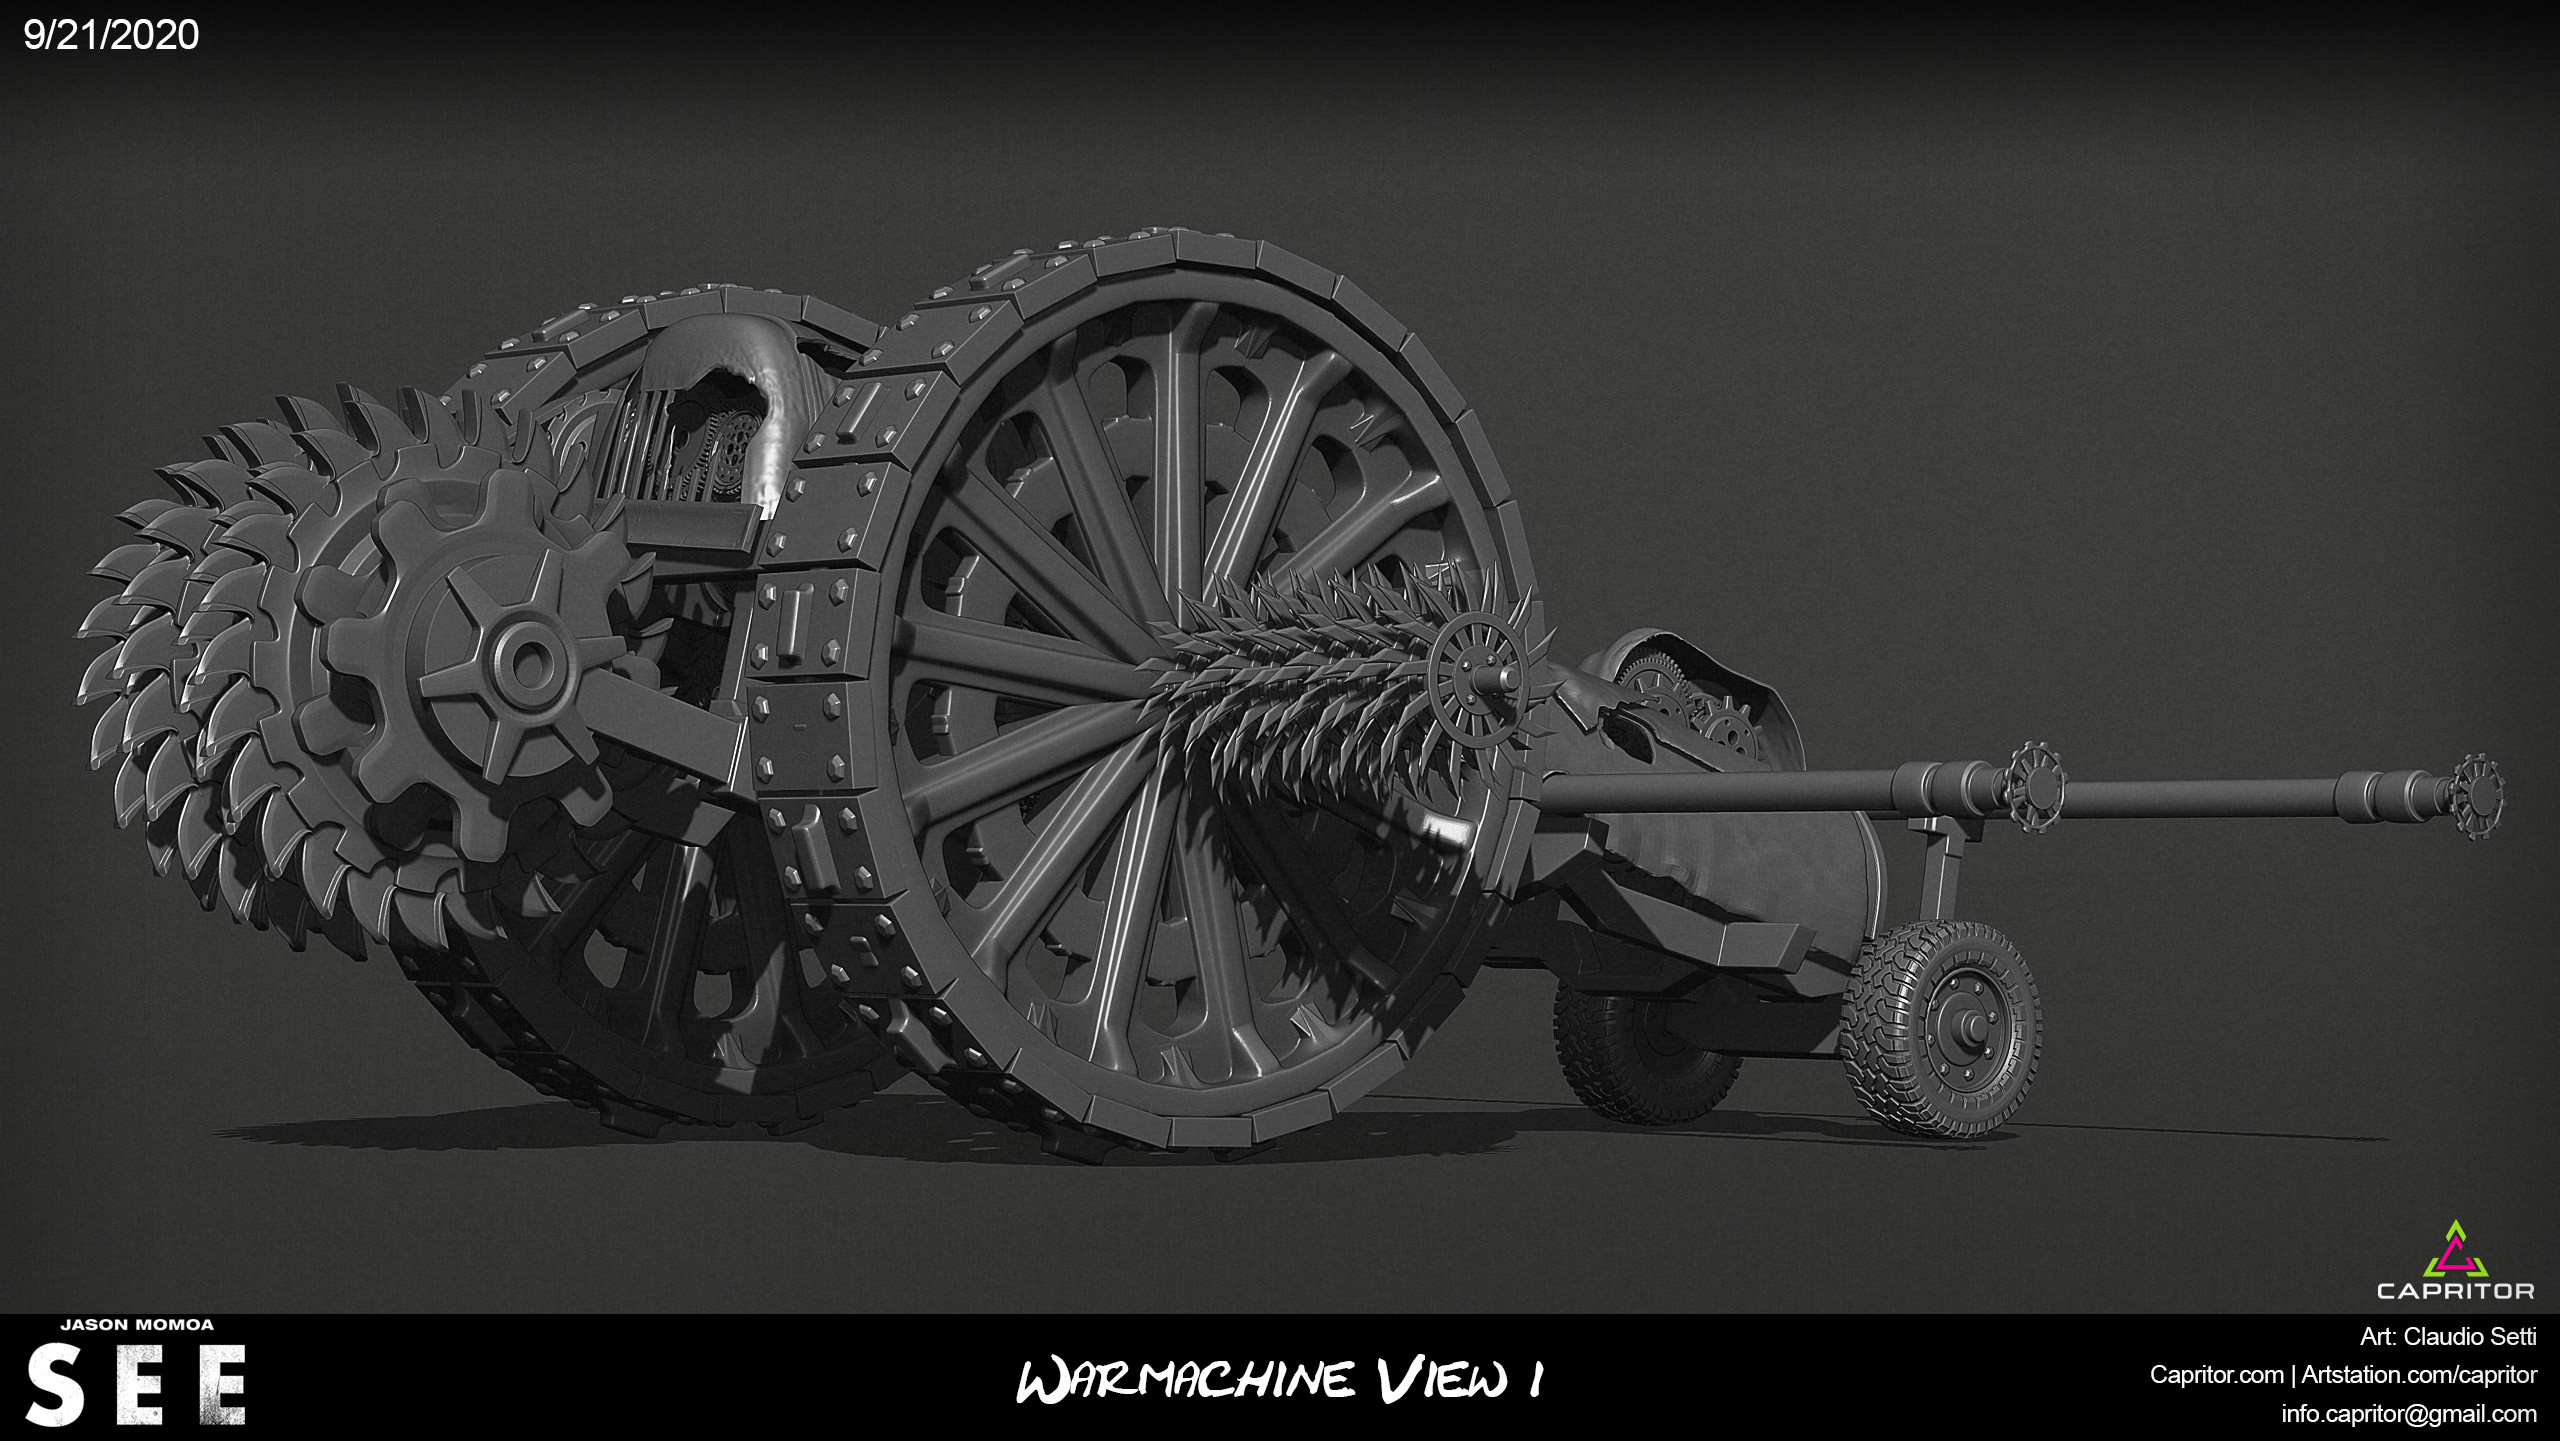 Jason Momoa - SEE - Warmachine Concept Design View 1